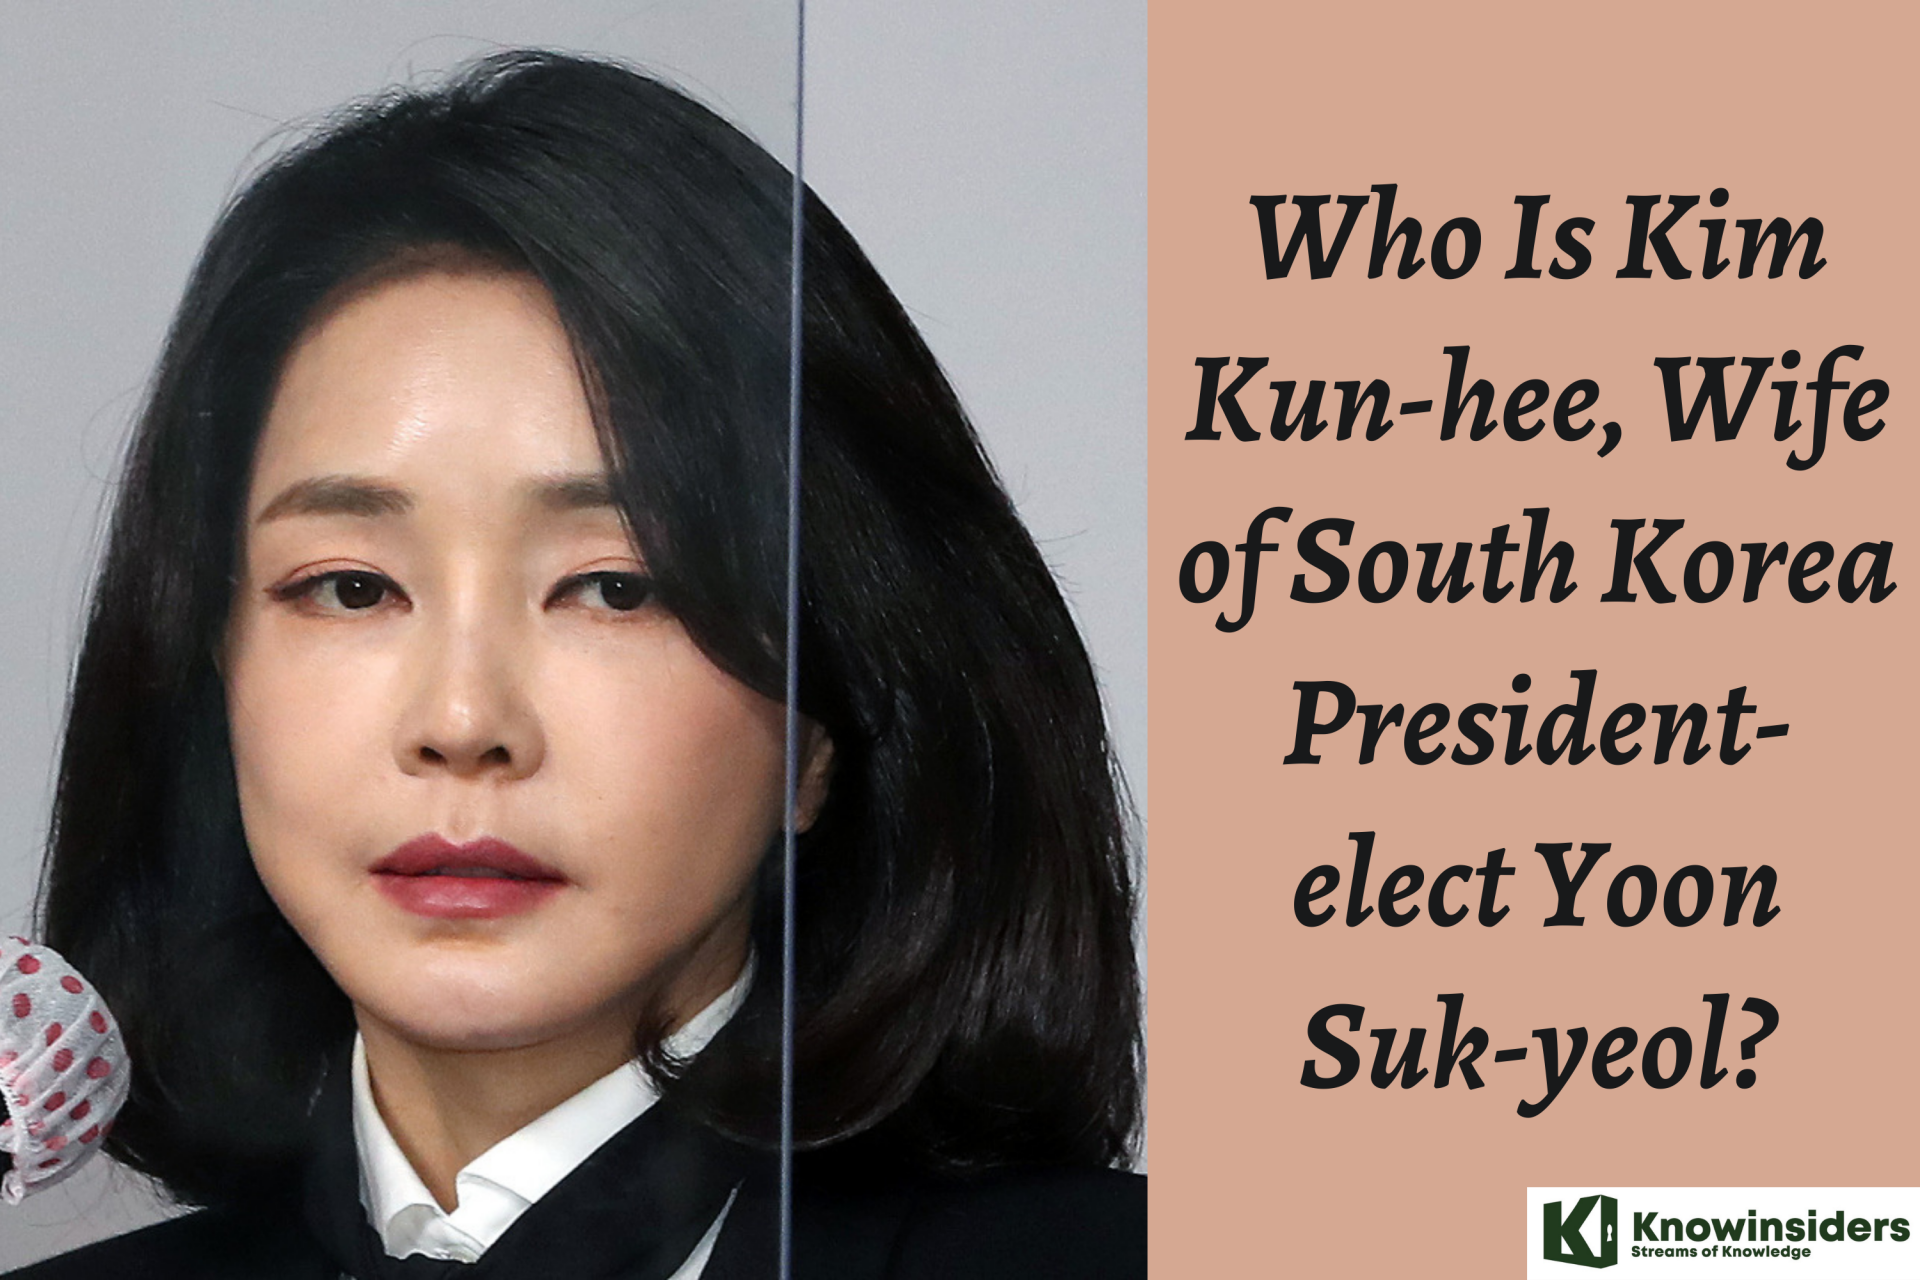 Who is Kim Kun-hee, Wife of South Korea President: Biography, Personal Life, Career